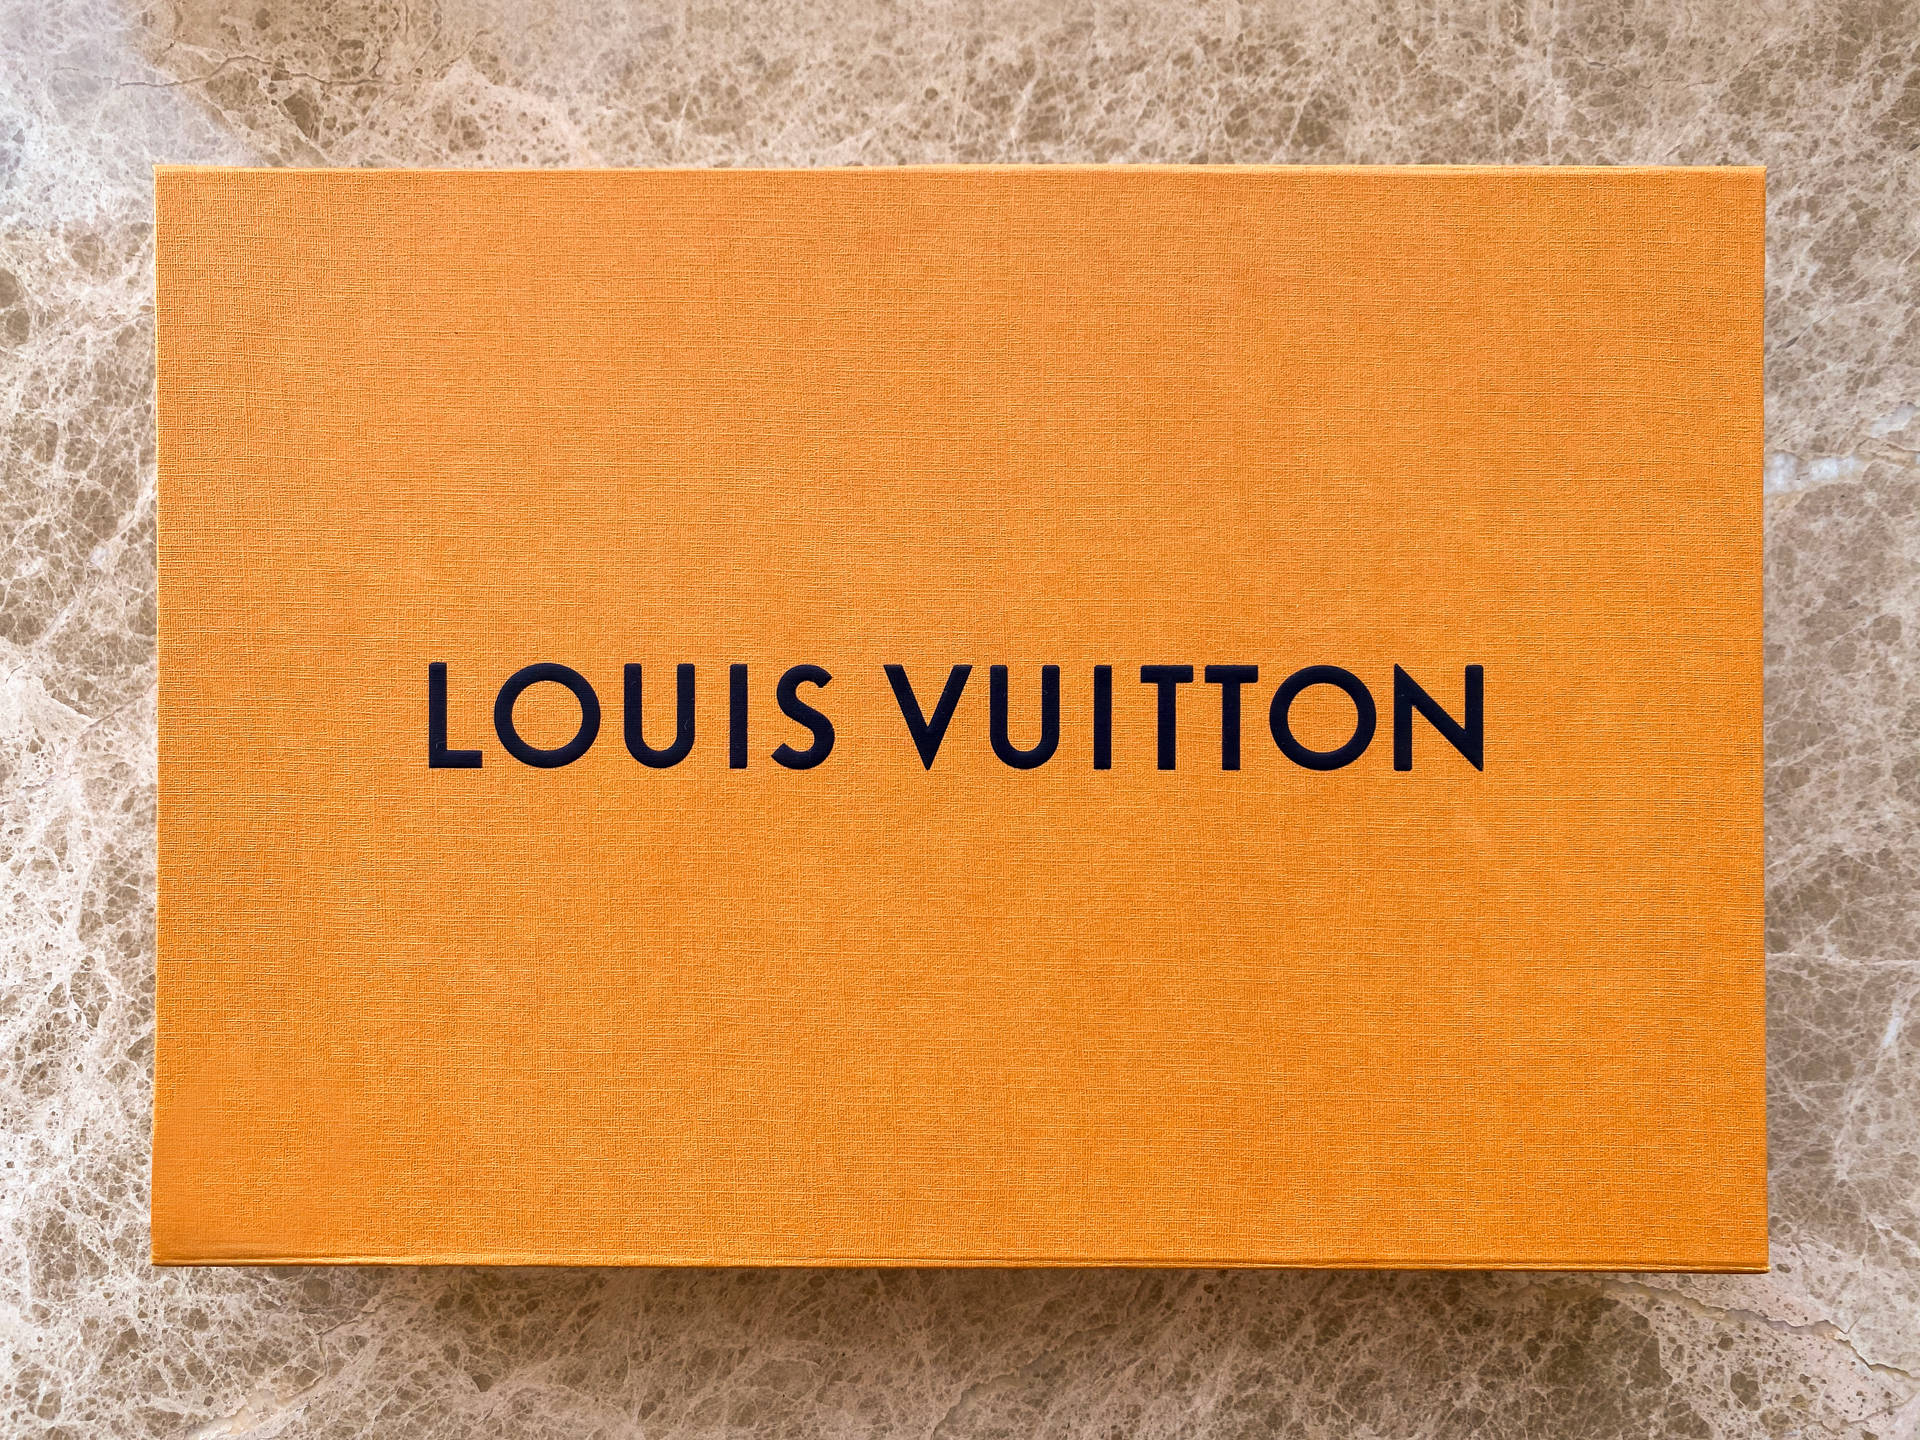 Louis Vuitton 4032X3024 wallpaper